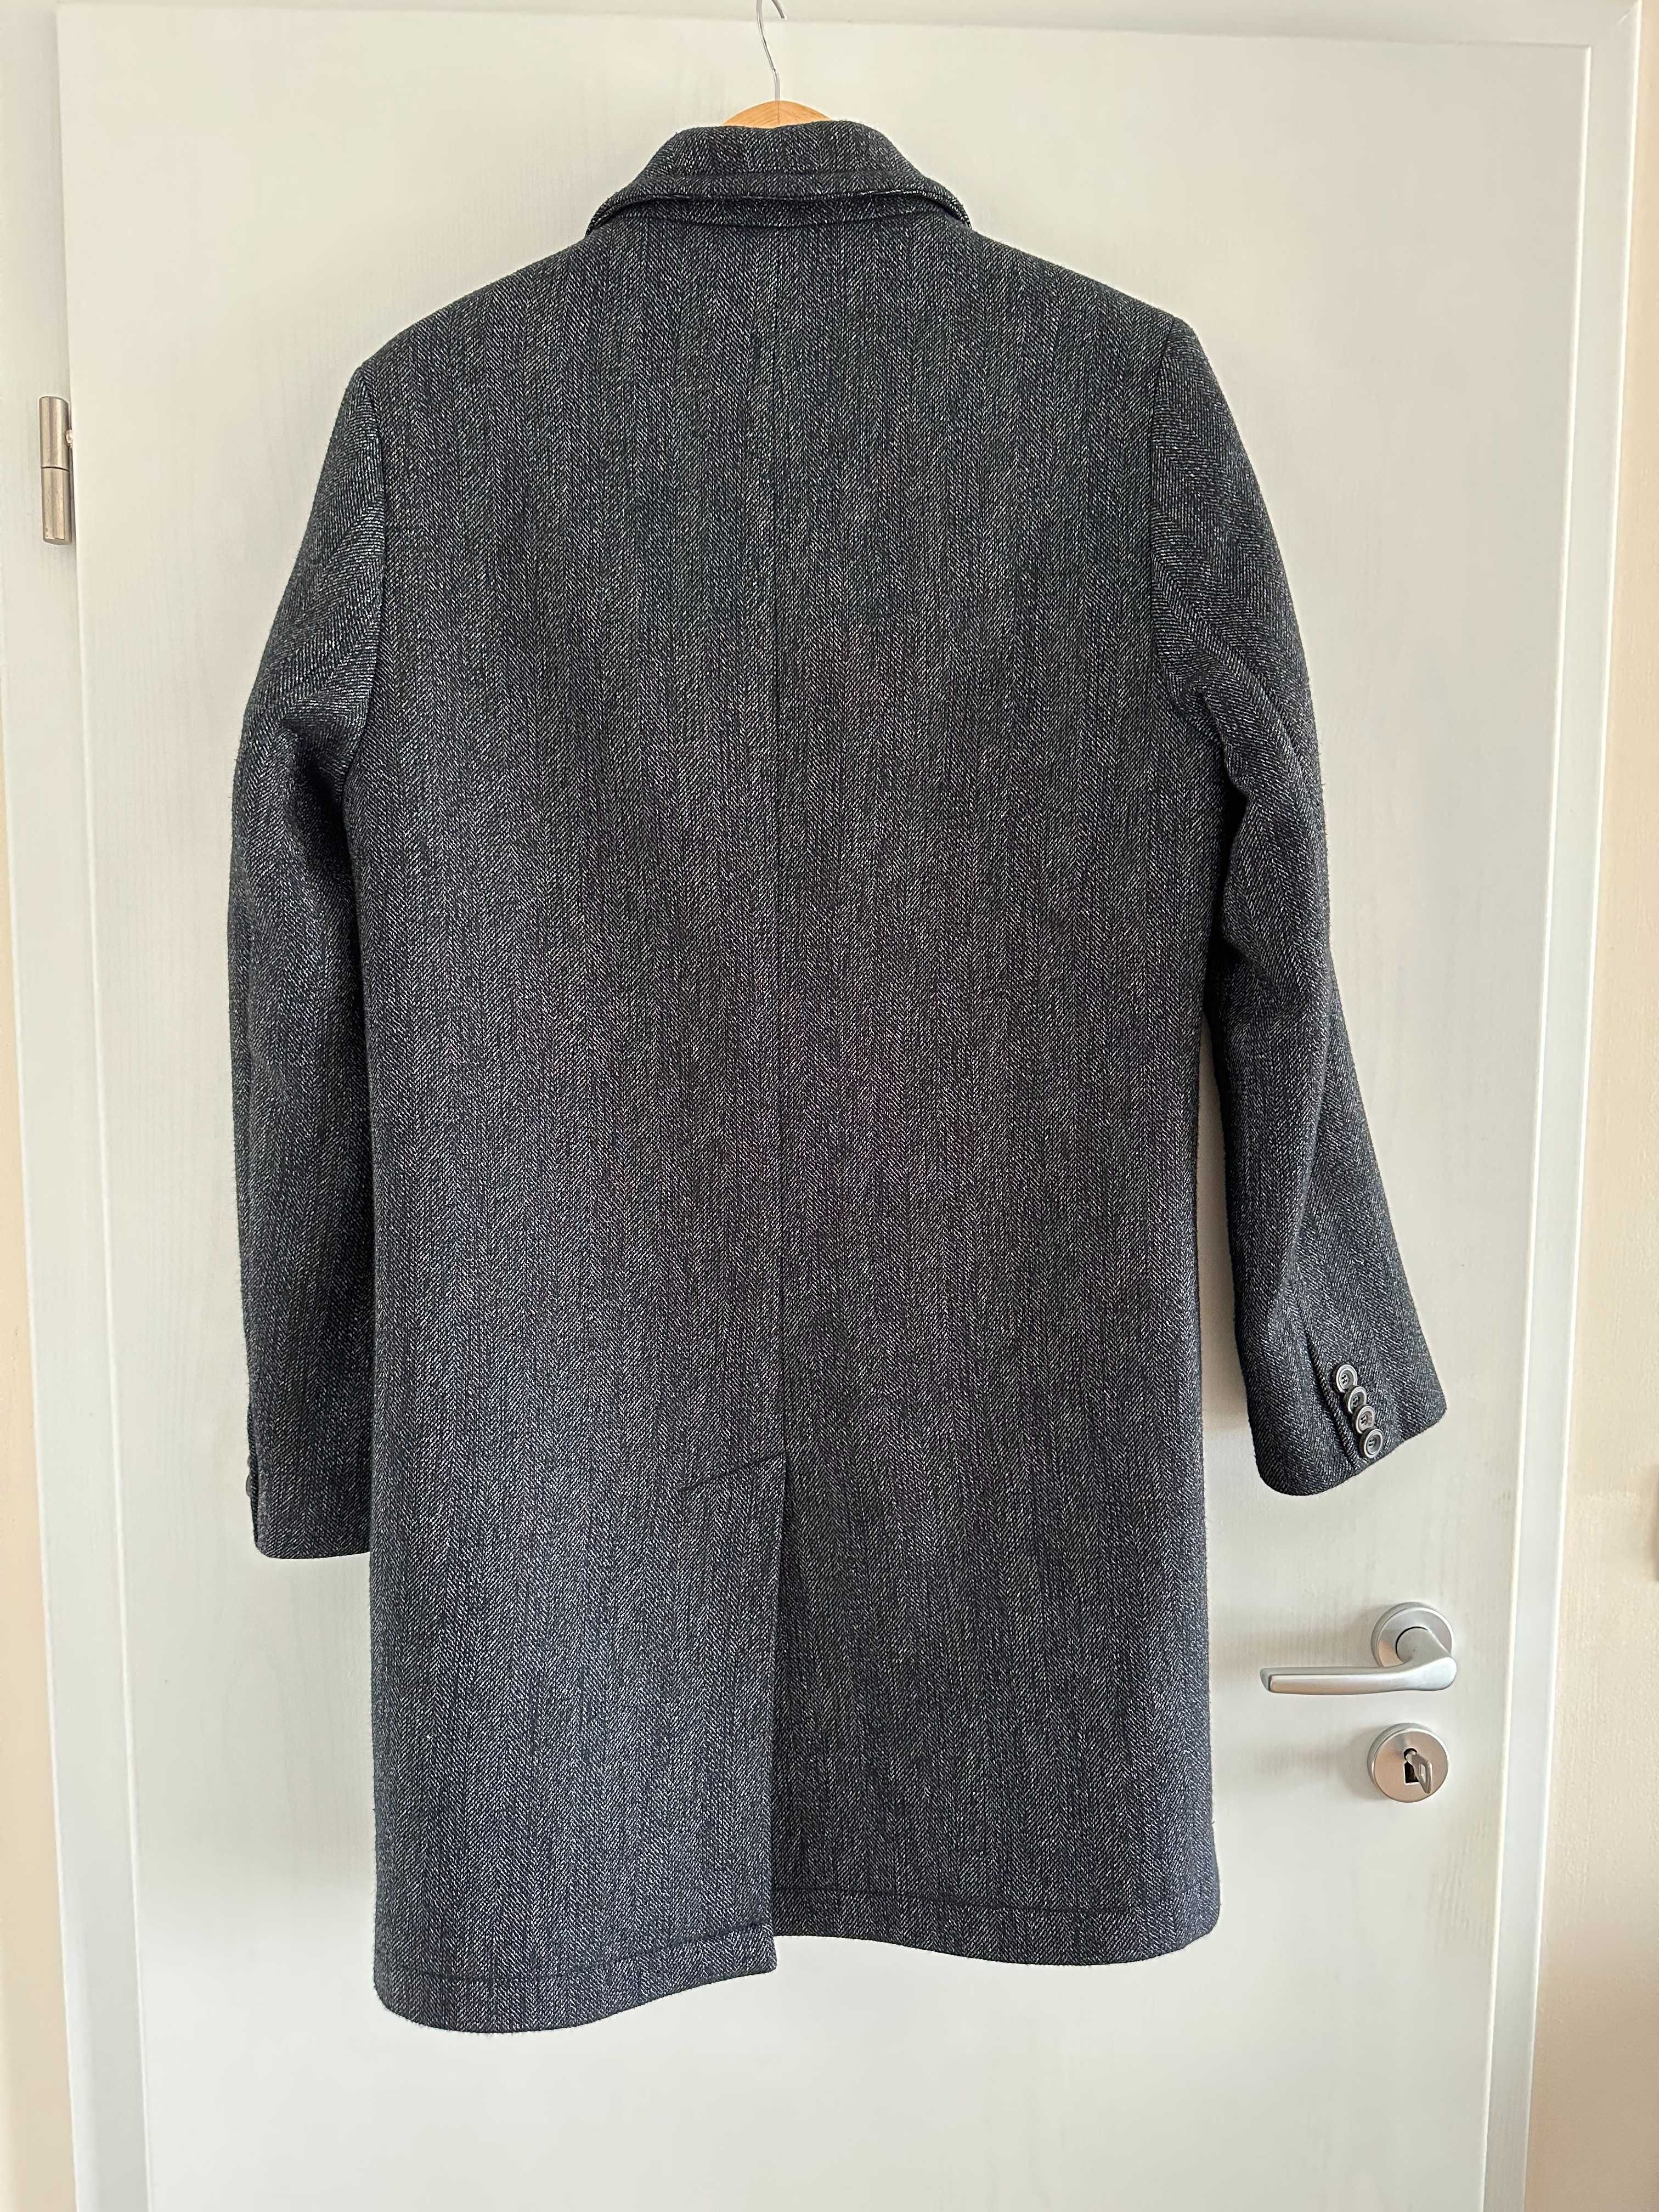 palton de lana, ZARA, gri marimea 42(52)